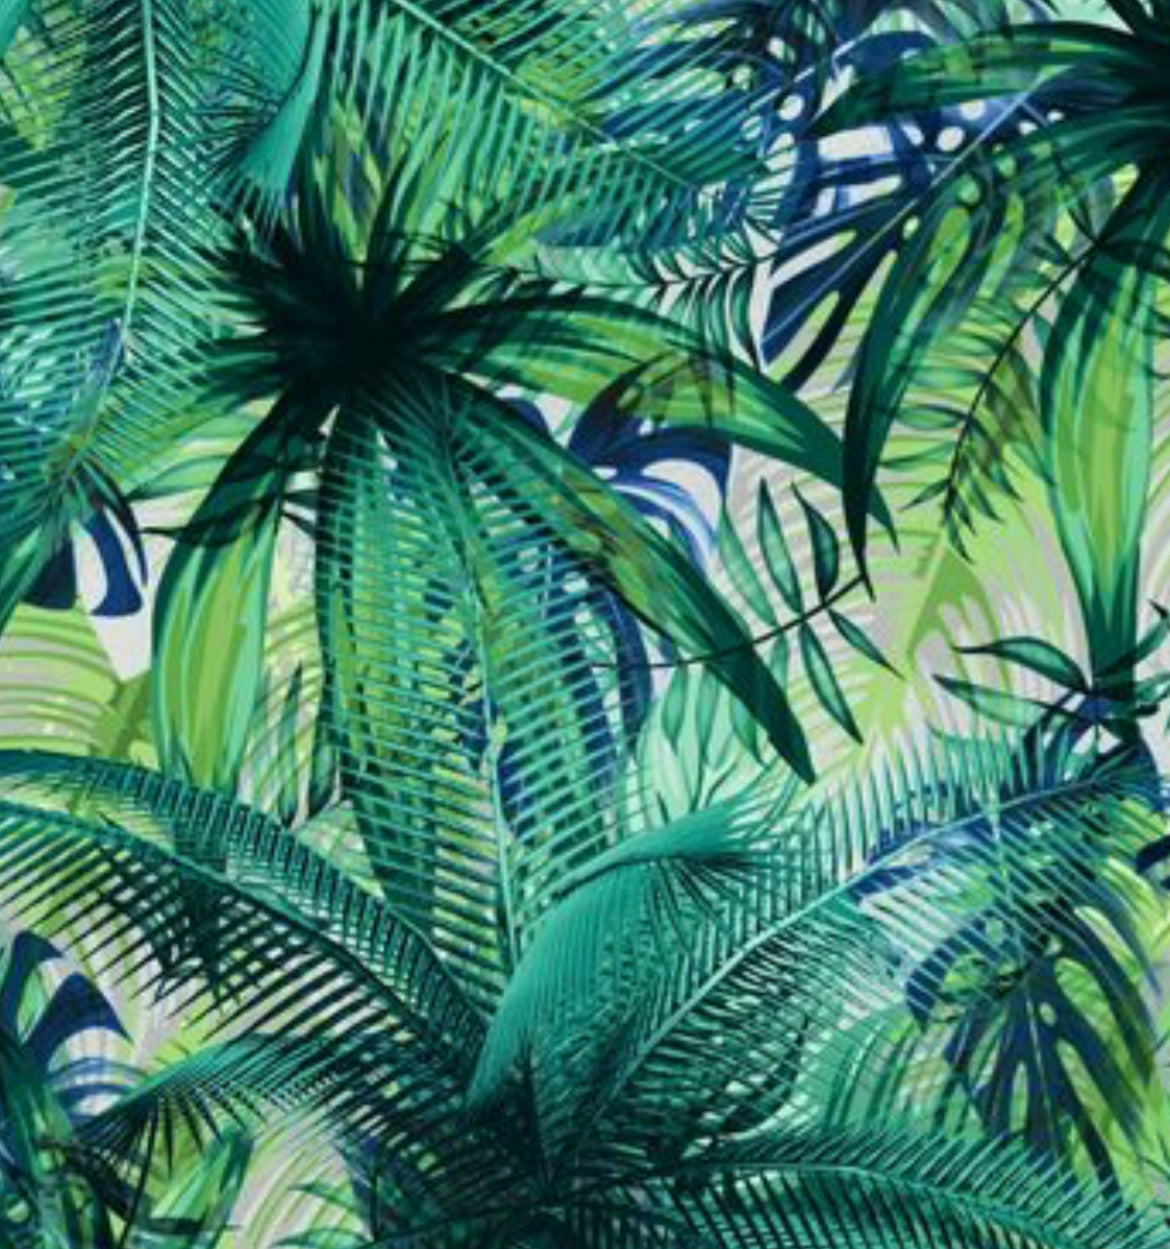 Crop Top Tan Through Bikini - Tropical Palm Green